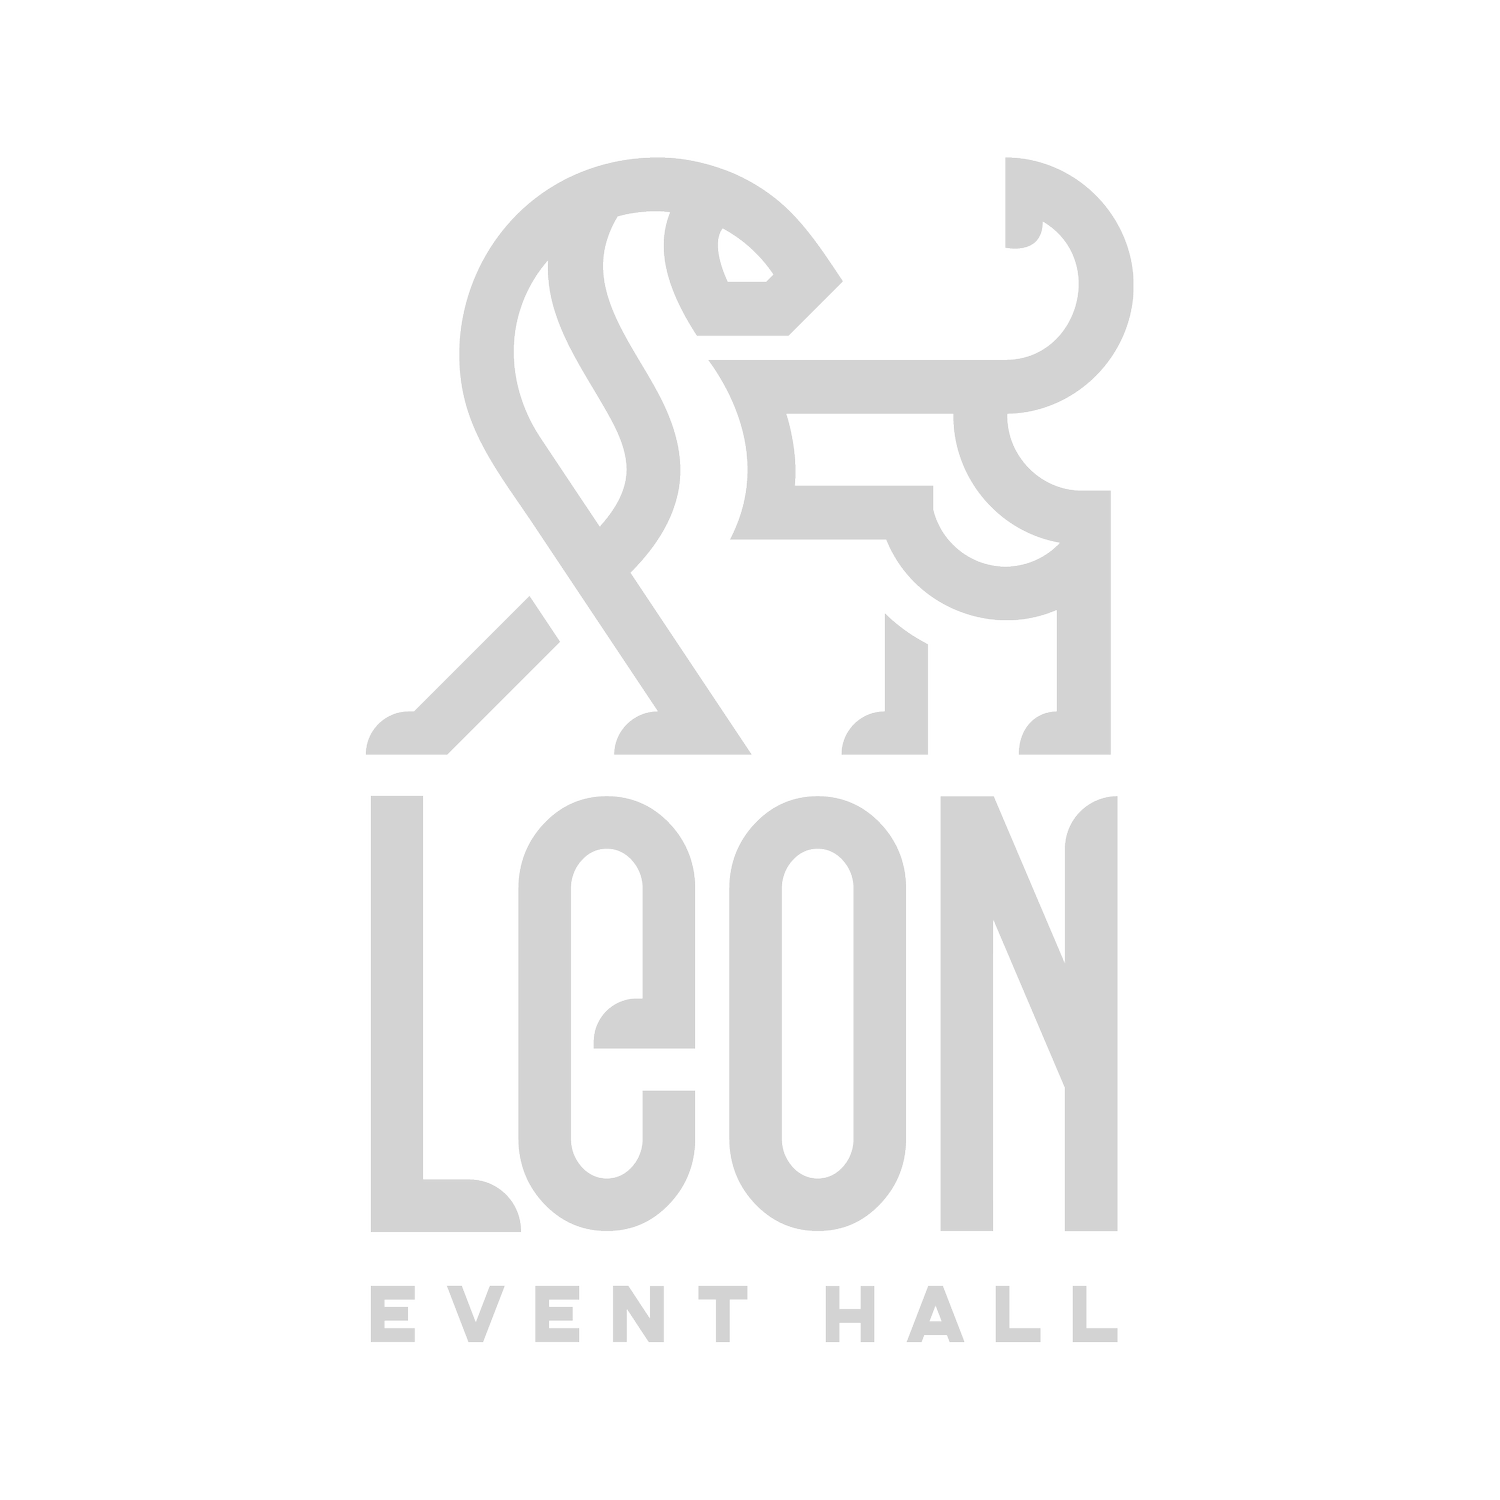 Leon Event Hall